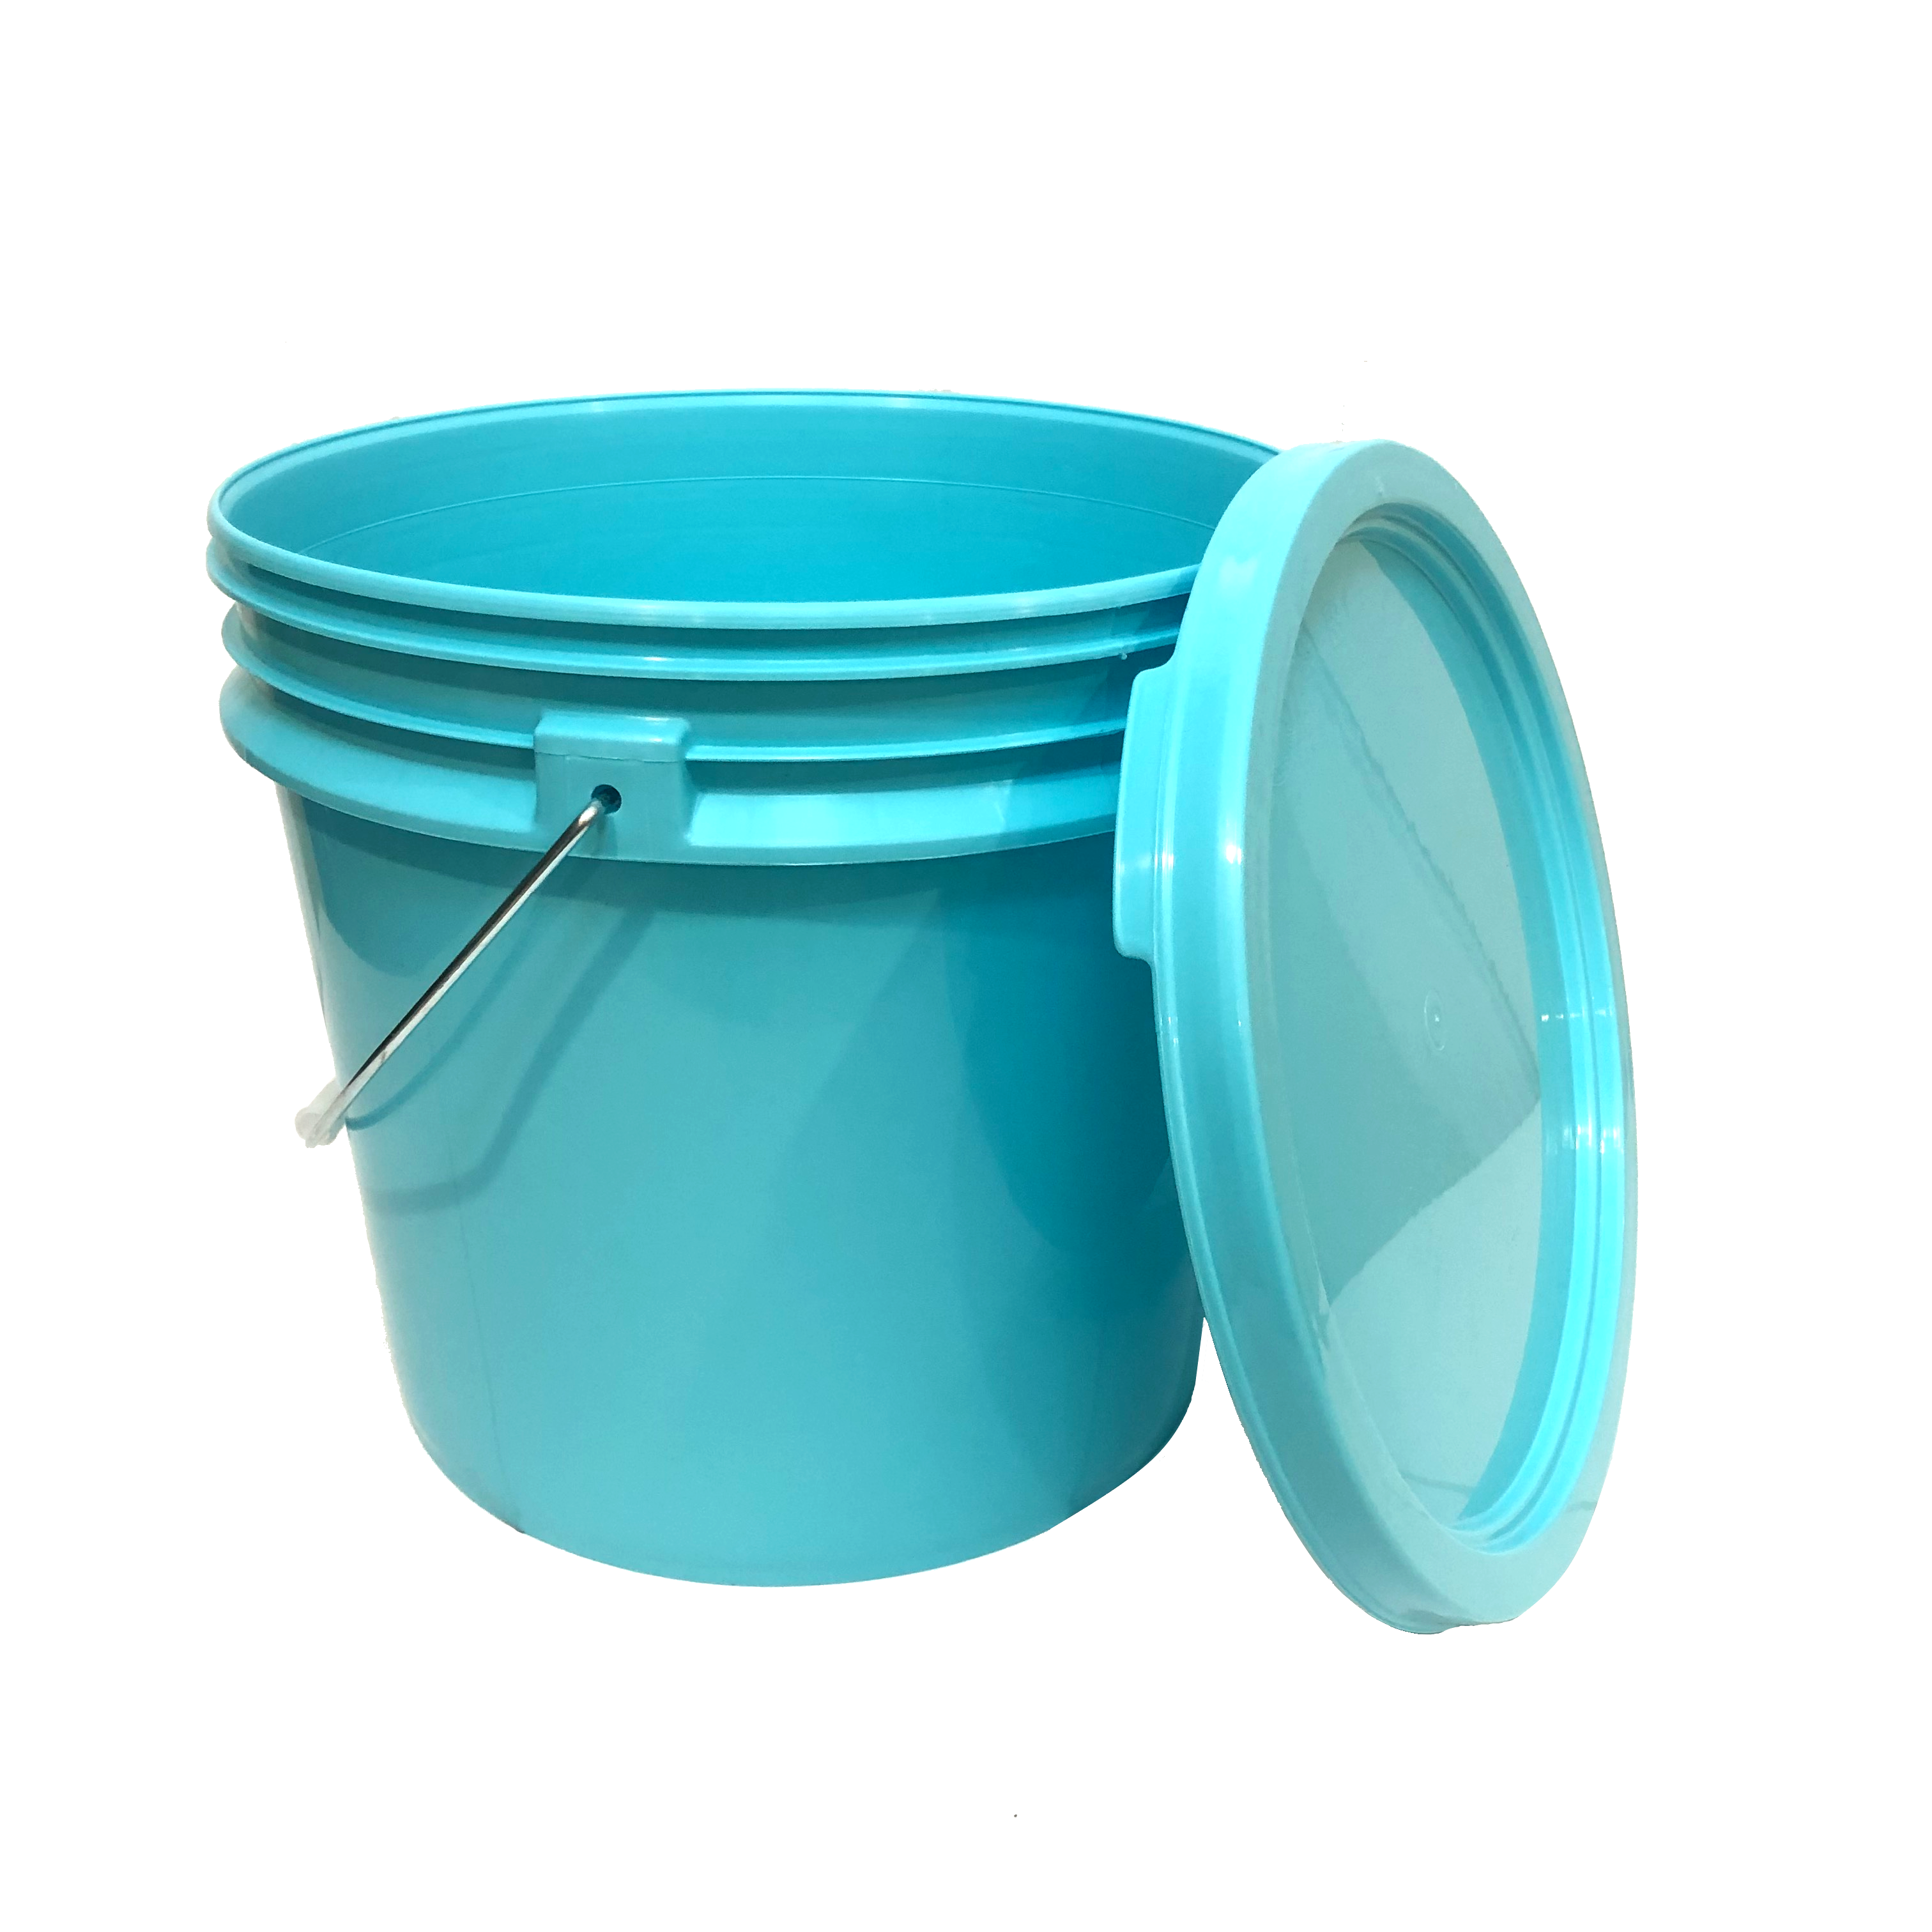 Bucket - 3.5 Gallon Outdoor Metal Handle Bucket with Lid, Aqua Blue Color, Lee  Fisher Sports